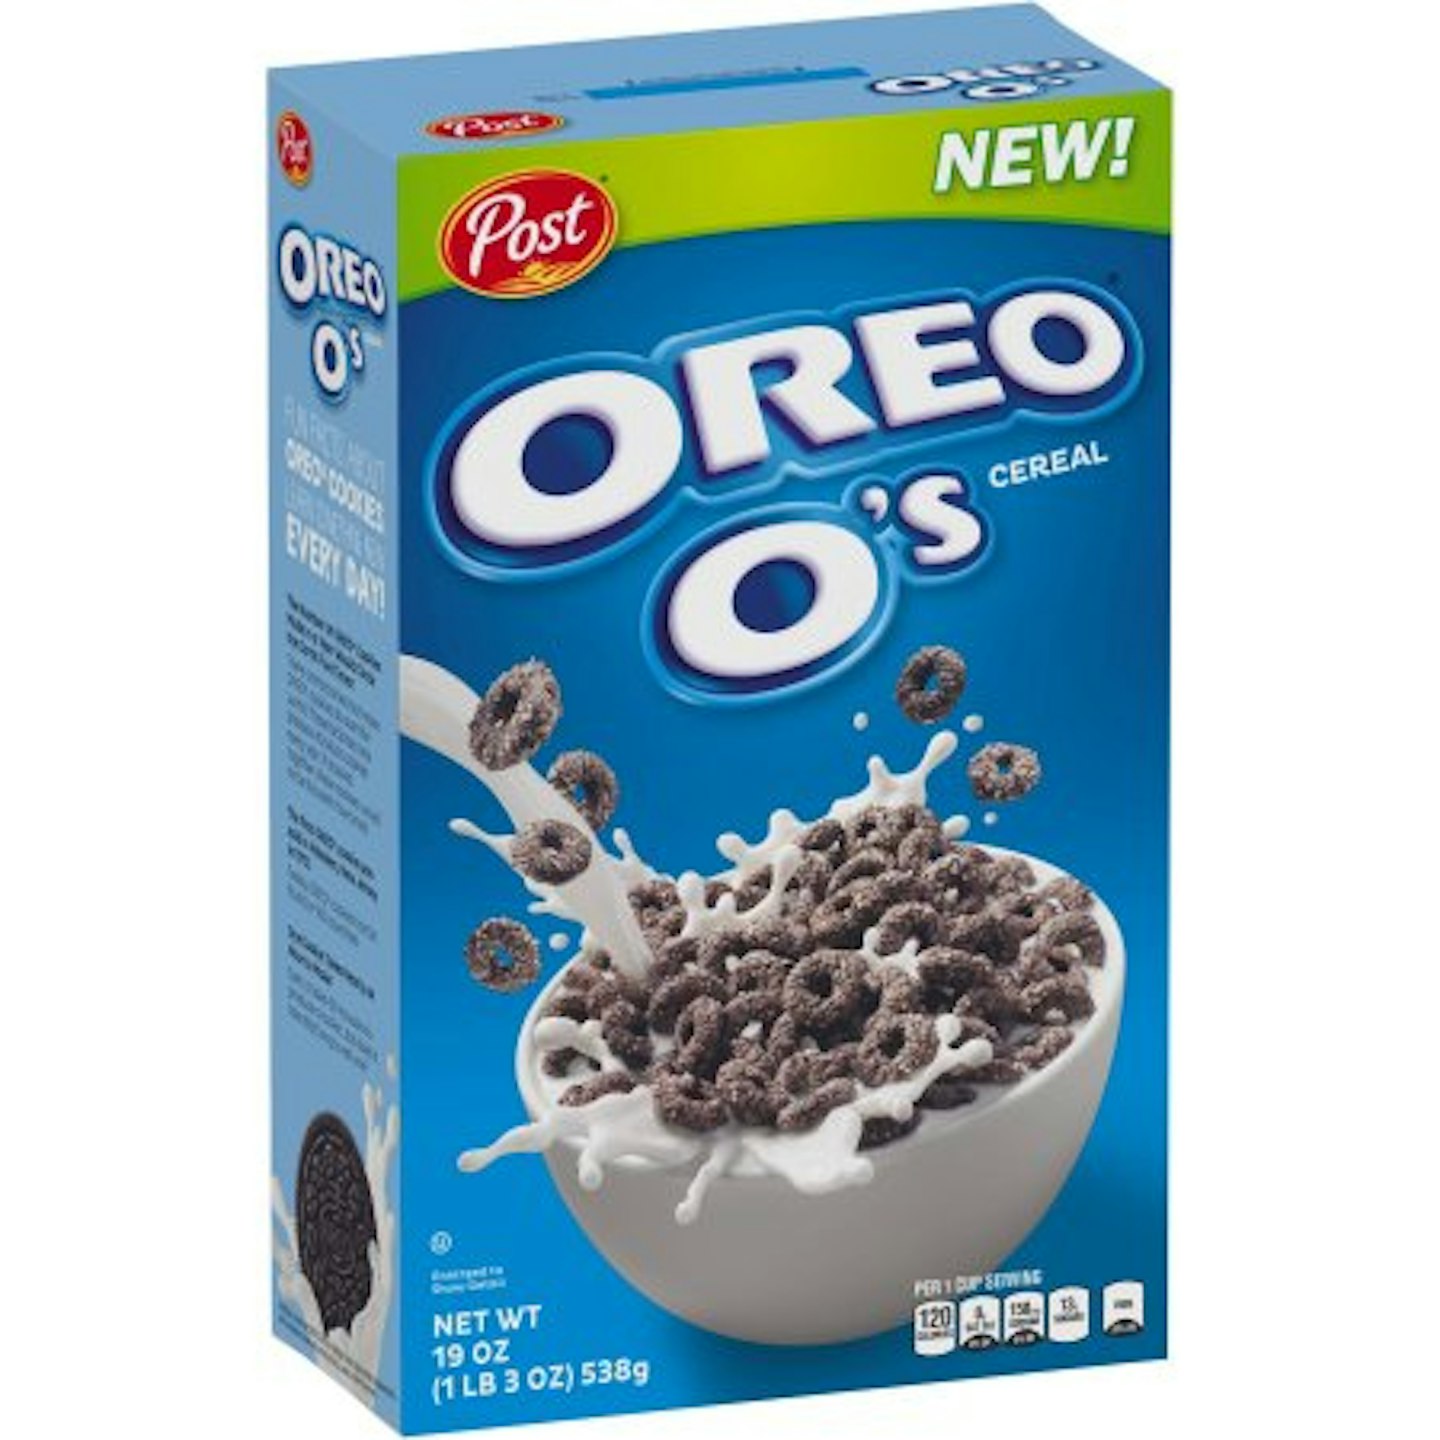 Discontinued cereals Oreo o'S